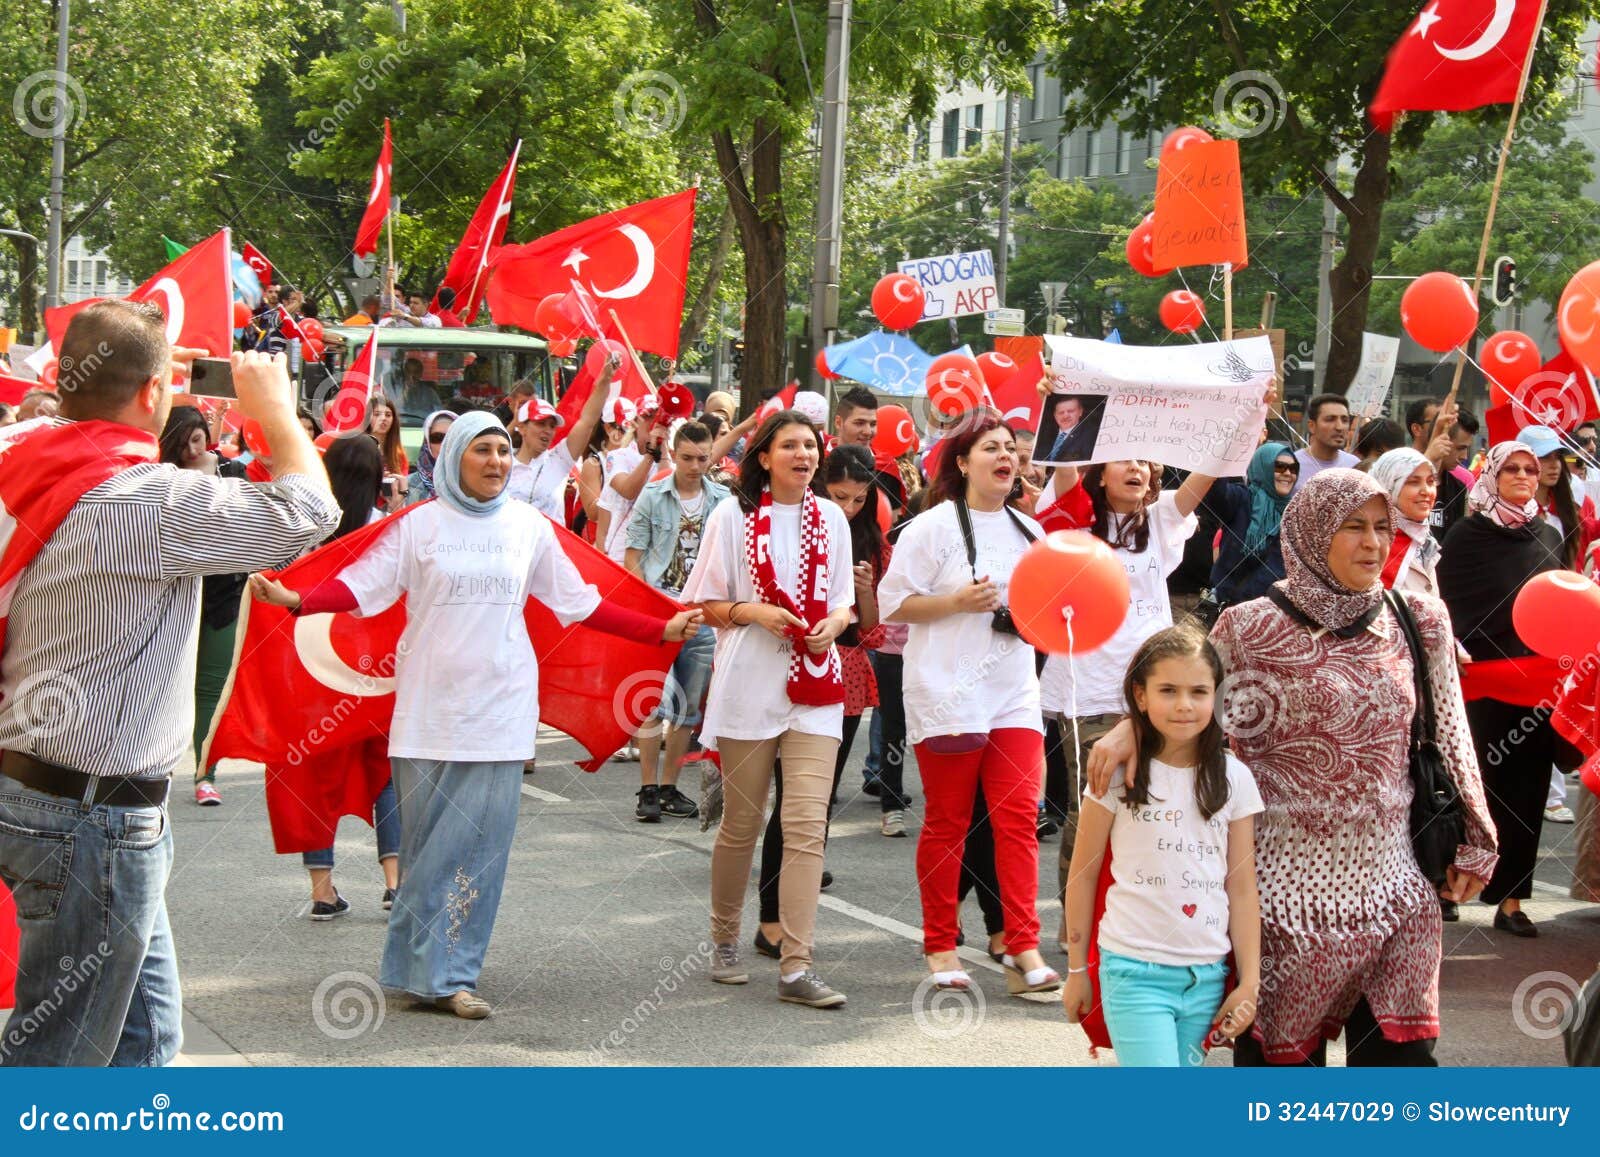 pro-erdogan-demonstration-munich-germany-july-people-turkish-origin-came-to-to-support-prime-minister-turkey-recep-32447029.jpg